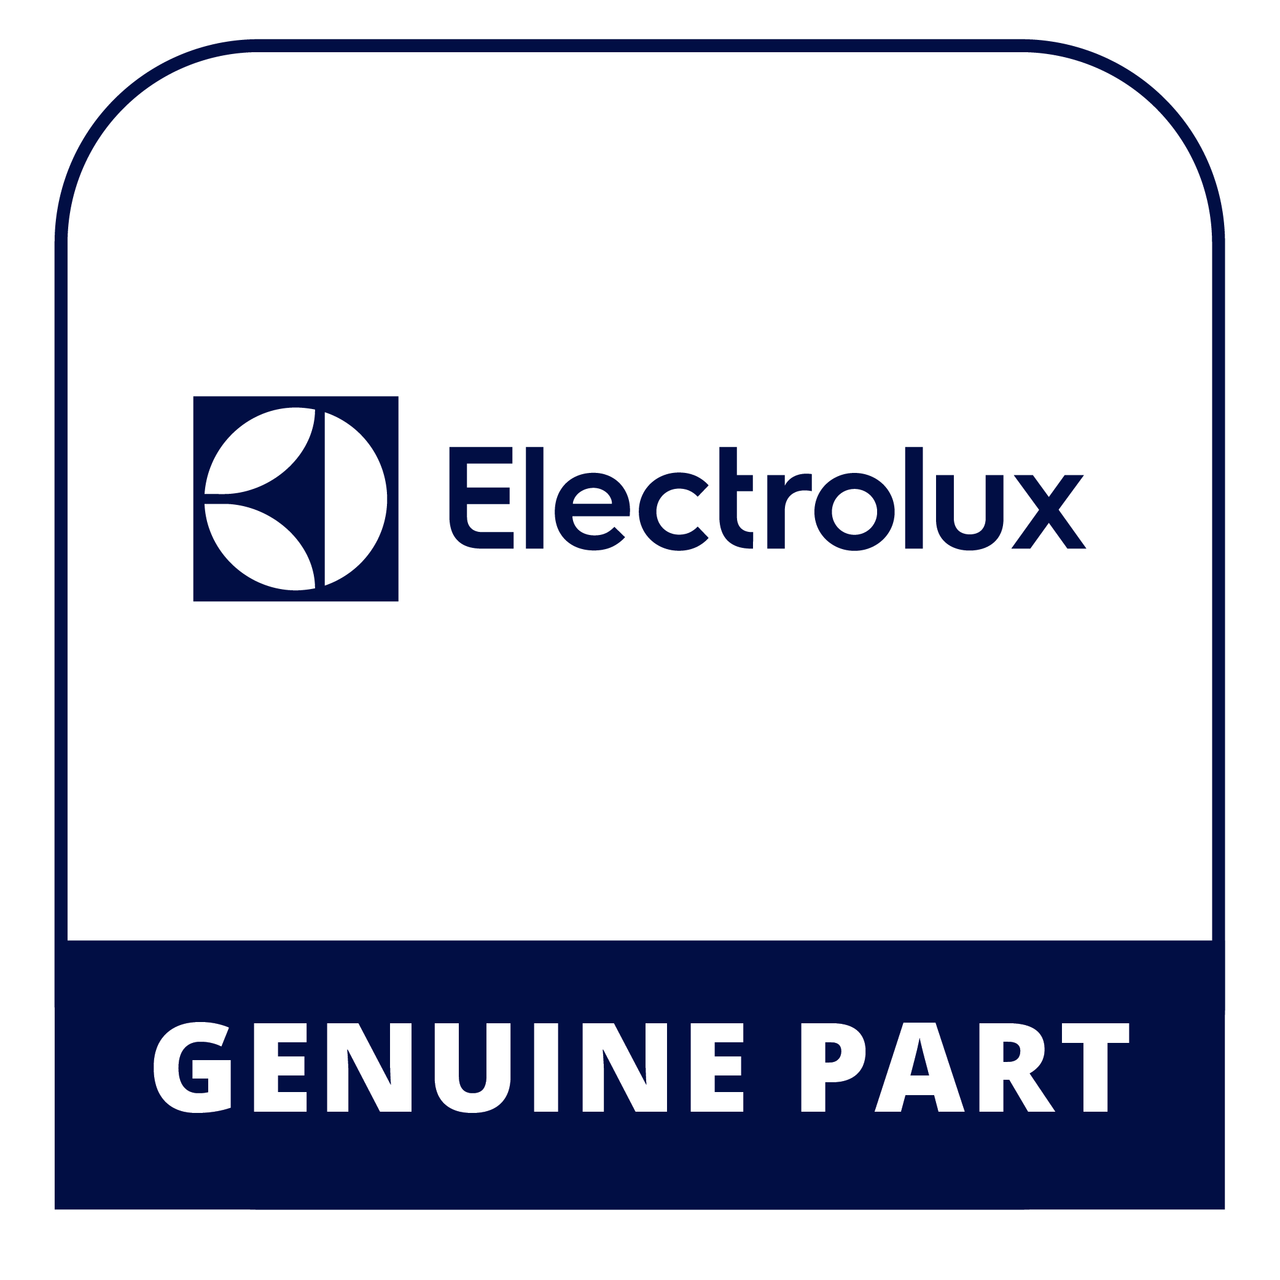 Frigidaire - Electrolux 5304499966 - Relay - Genuine Electrolux Part